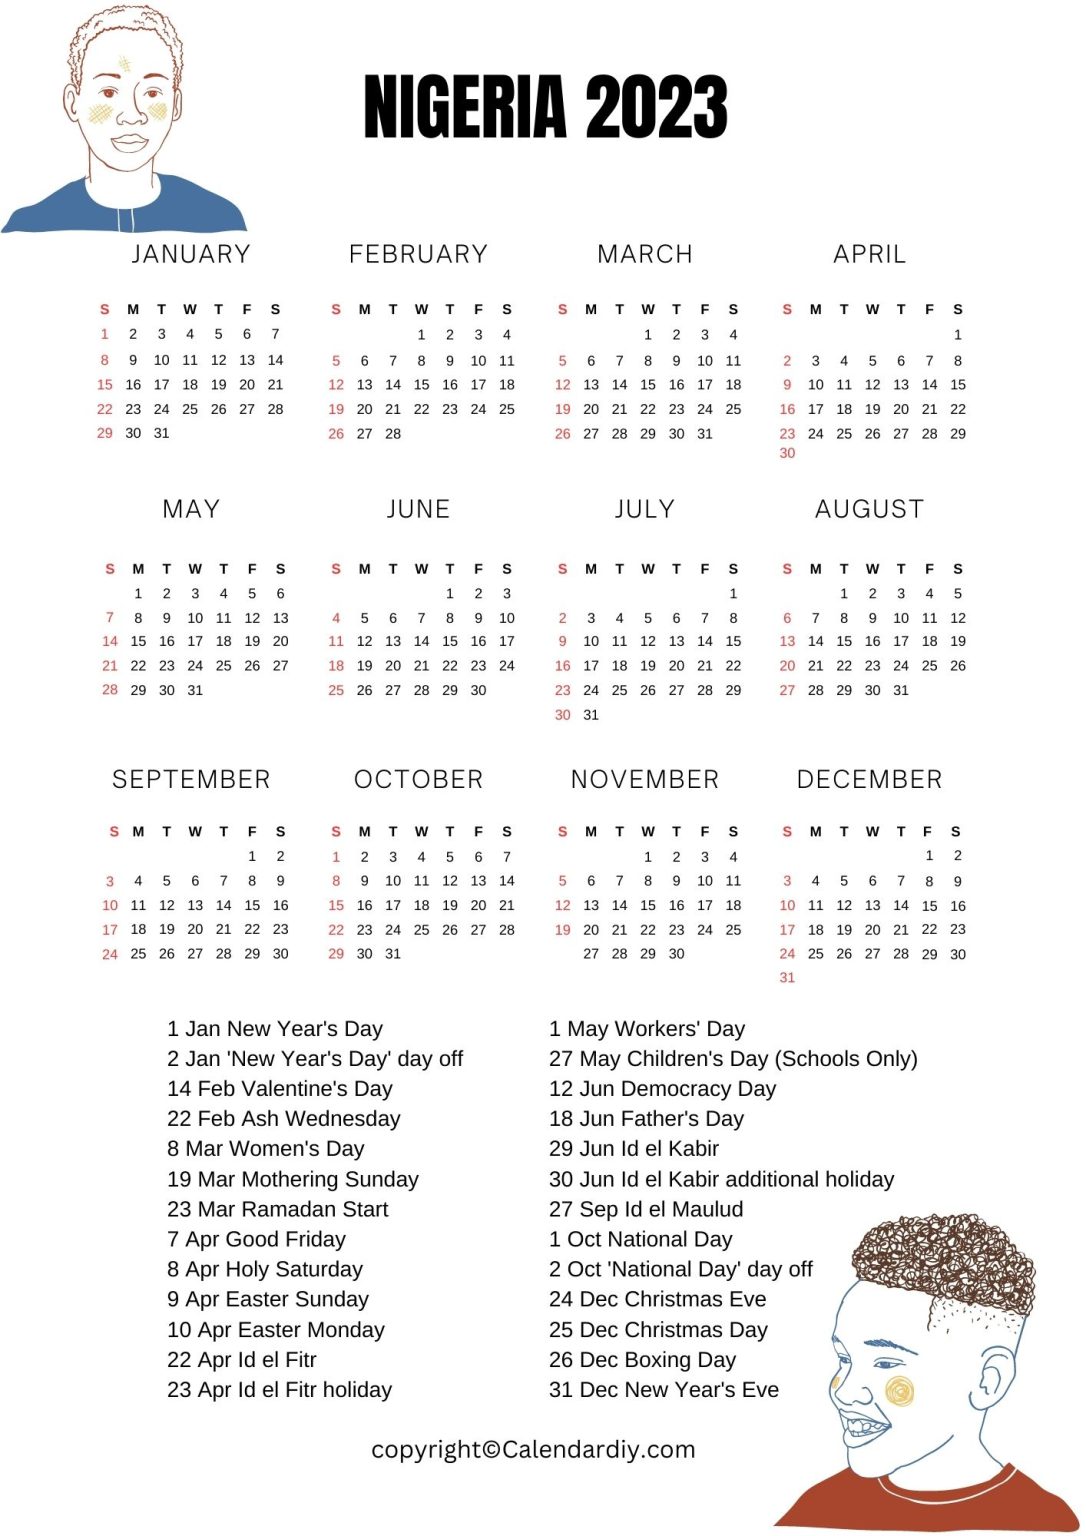 Nigeria 2023 Calendar Printable With Public Holidays